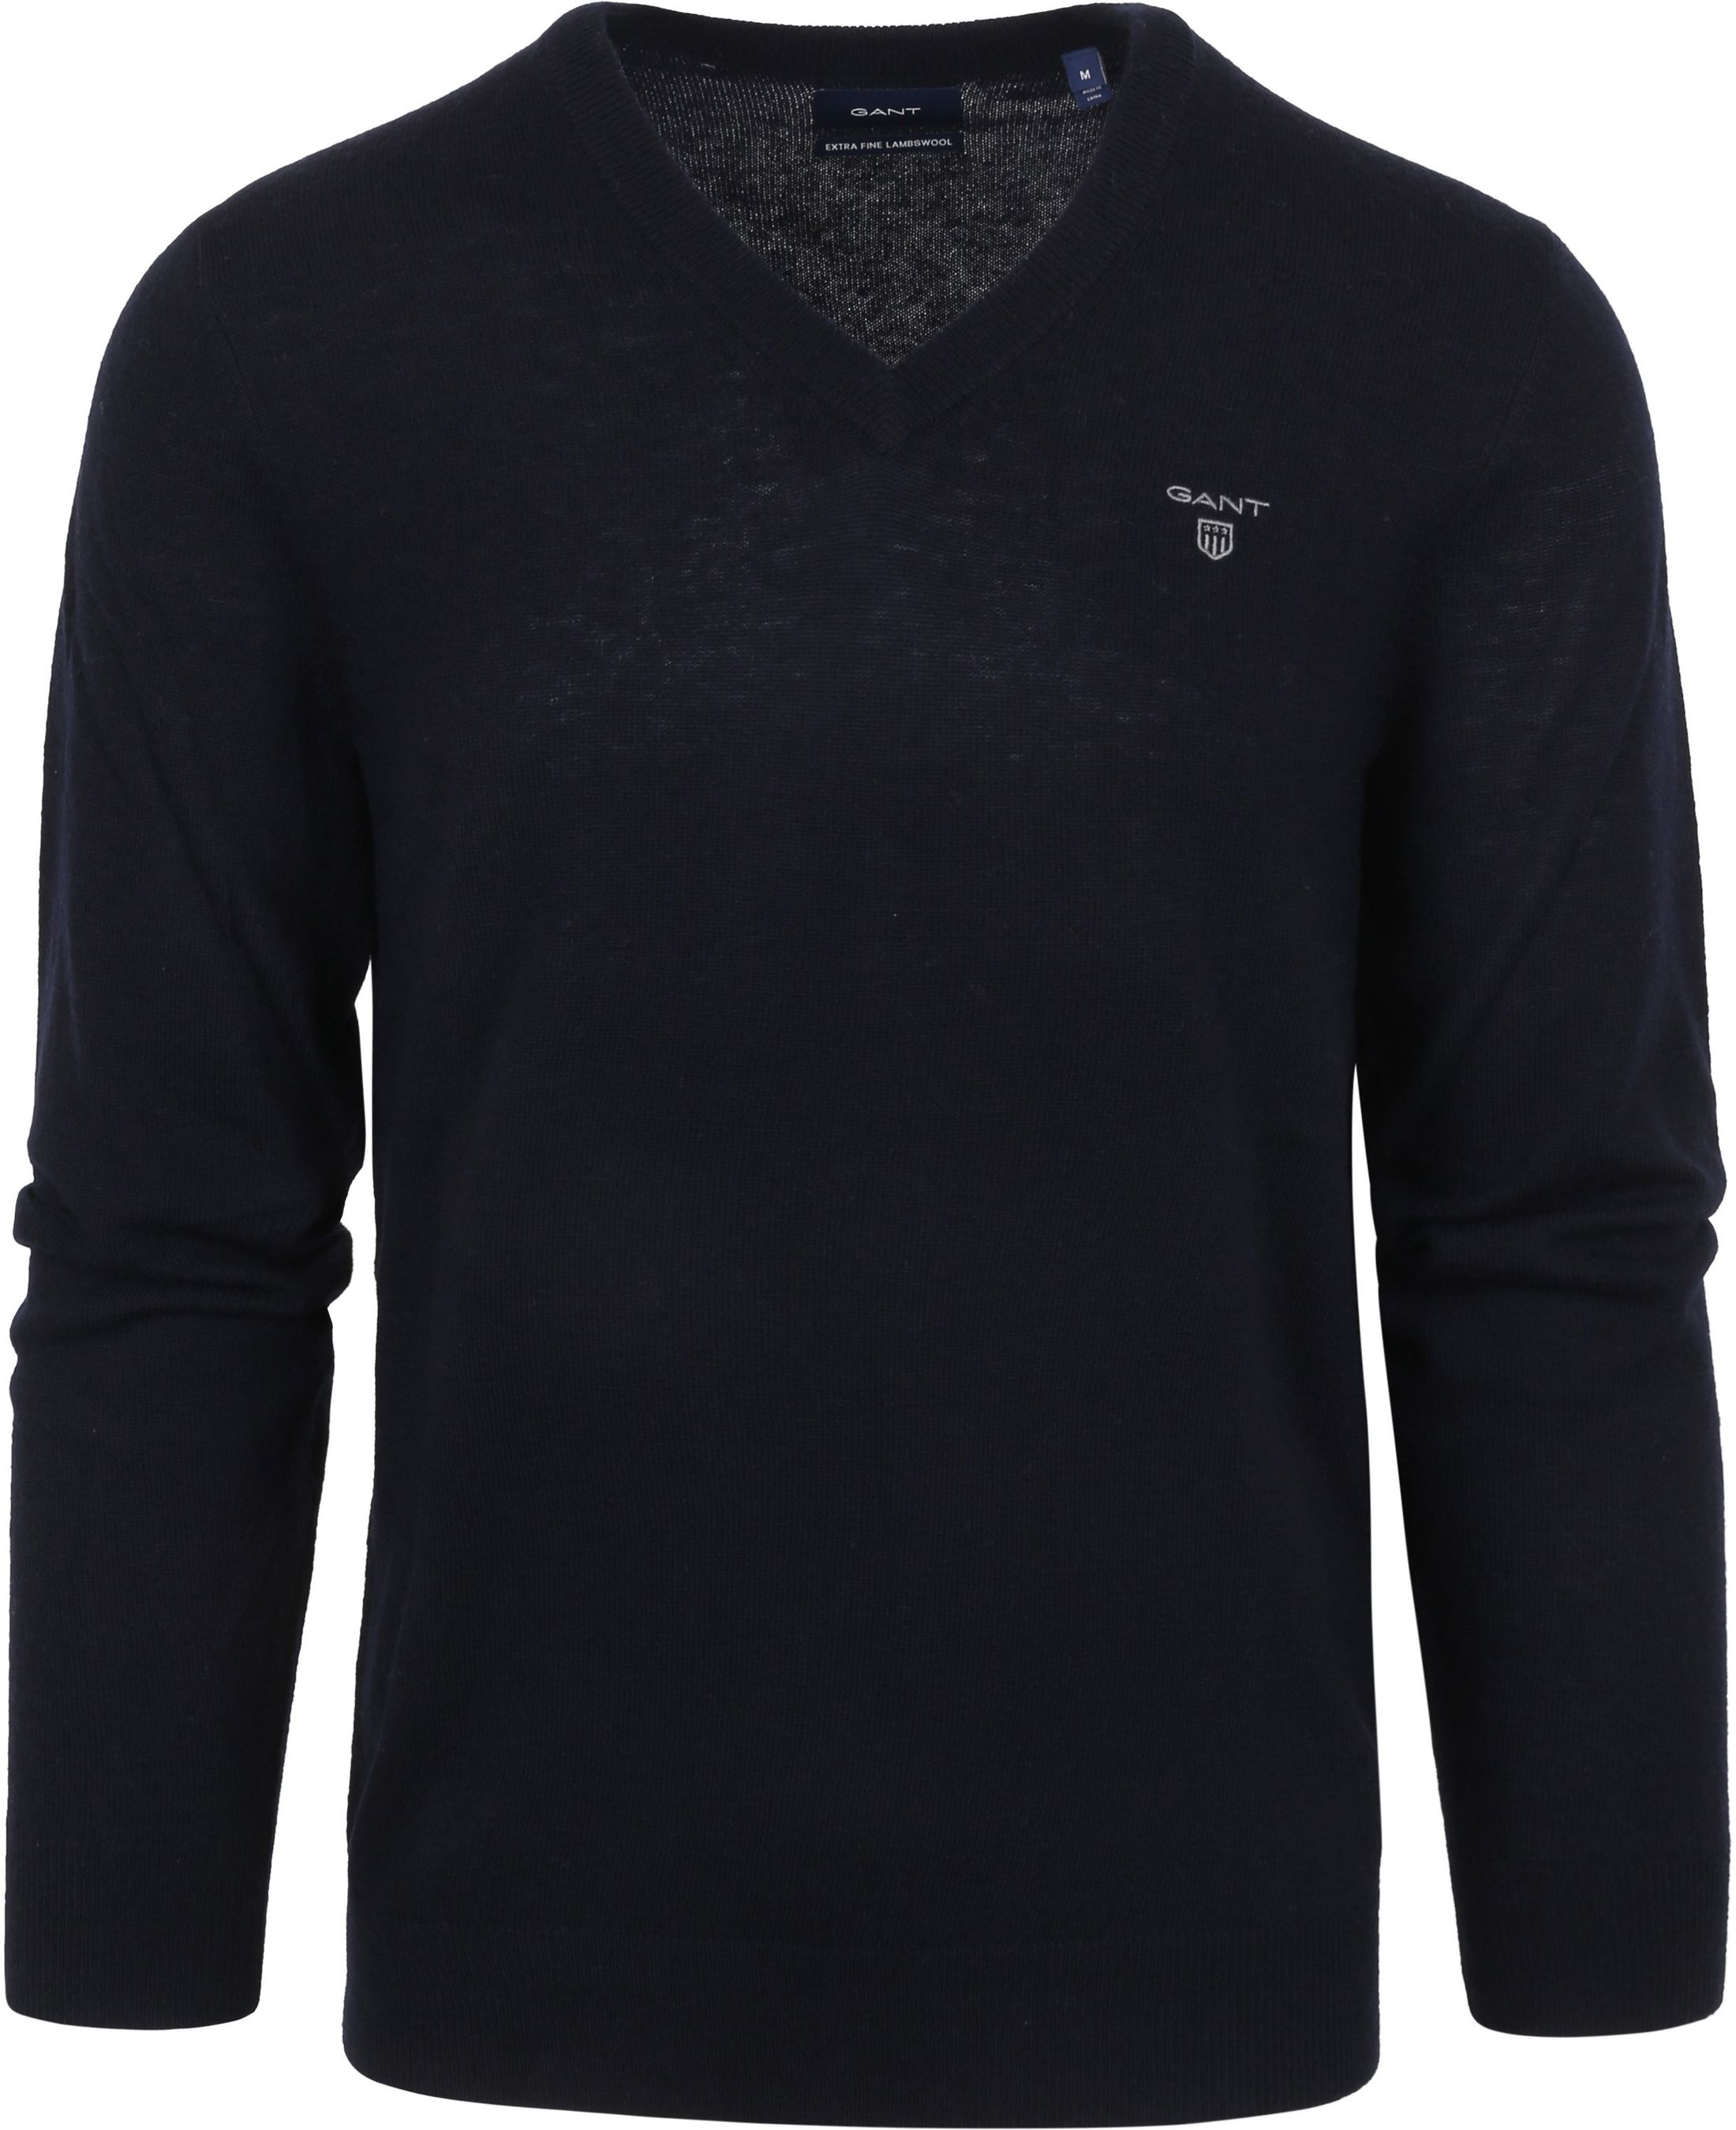 Gant Sweater Lambswool Navy Blue Dark Blue size M